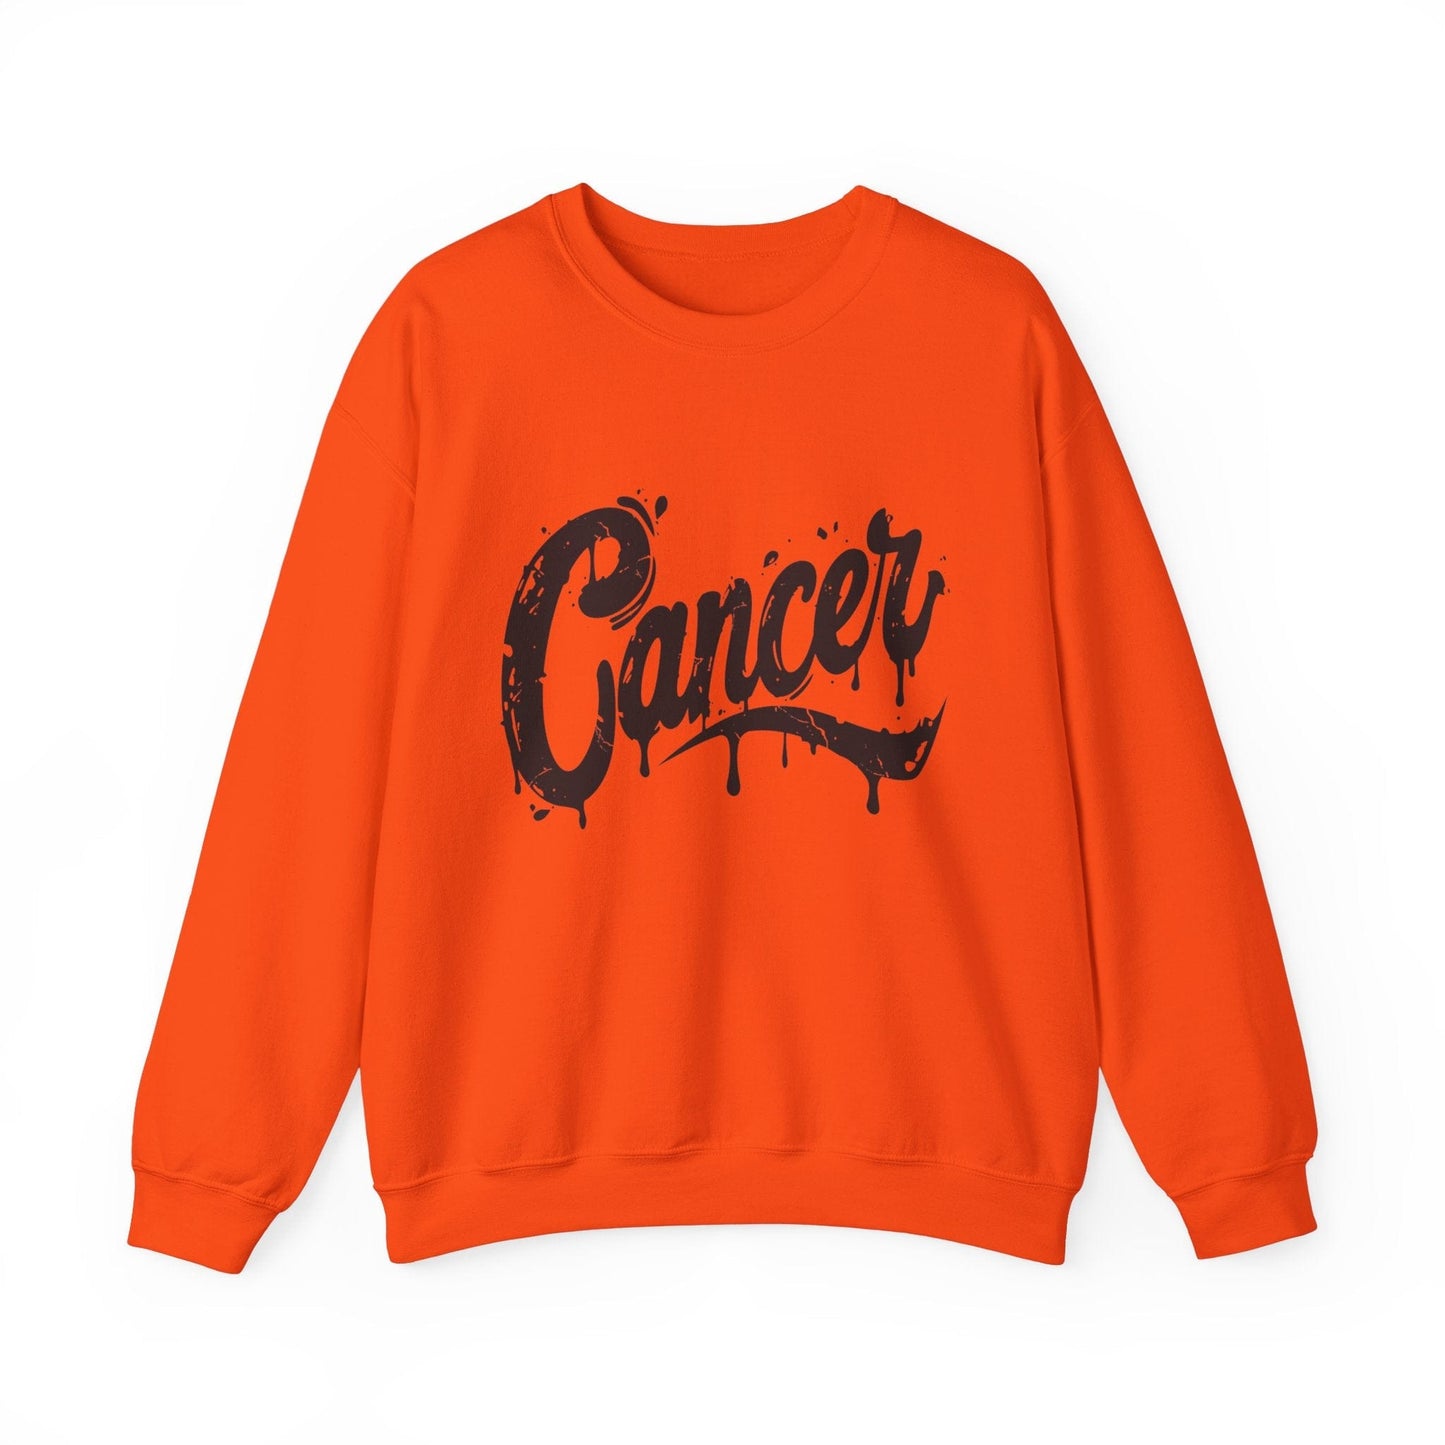 Sweatshirt S / Orange Tidal Emotion Cancer Sweater: Comfort in the Currents